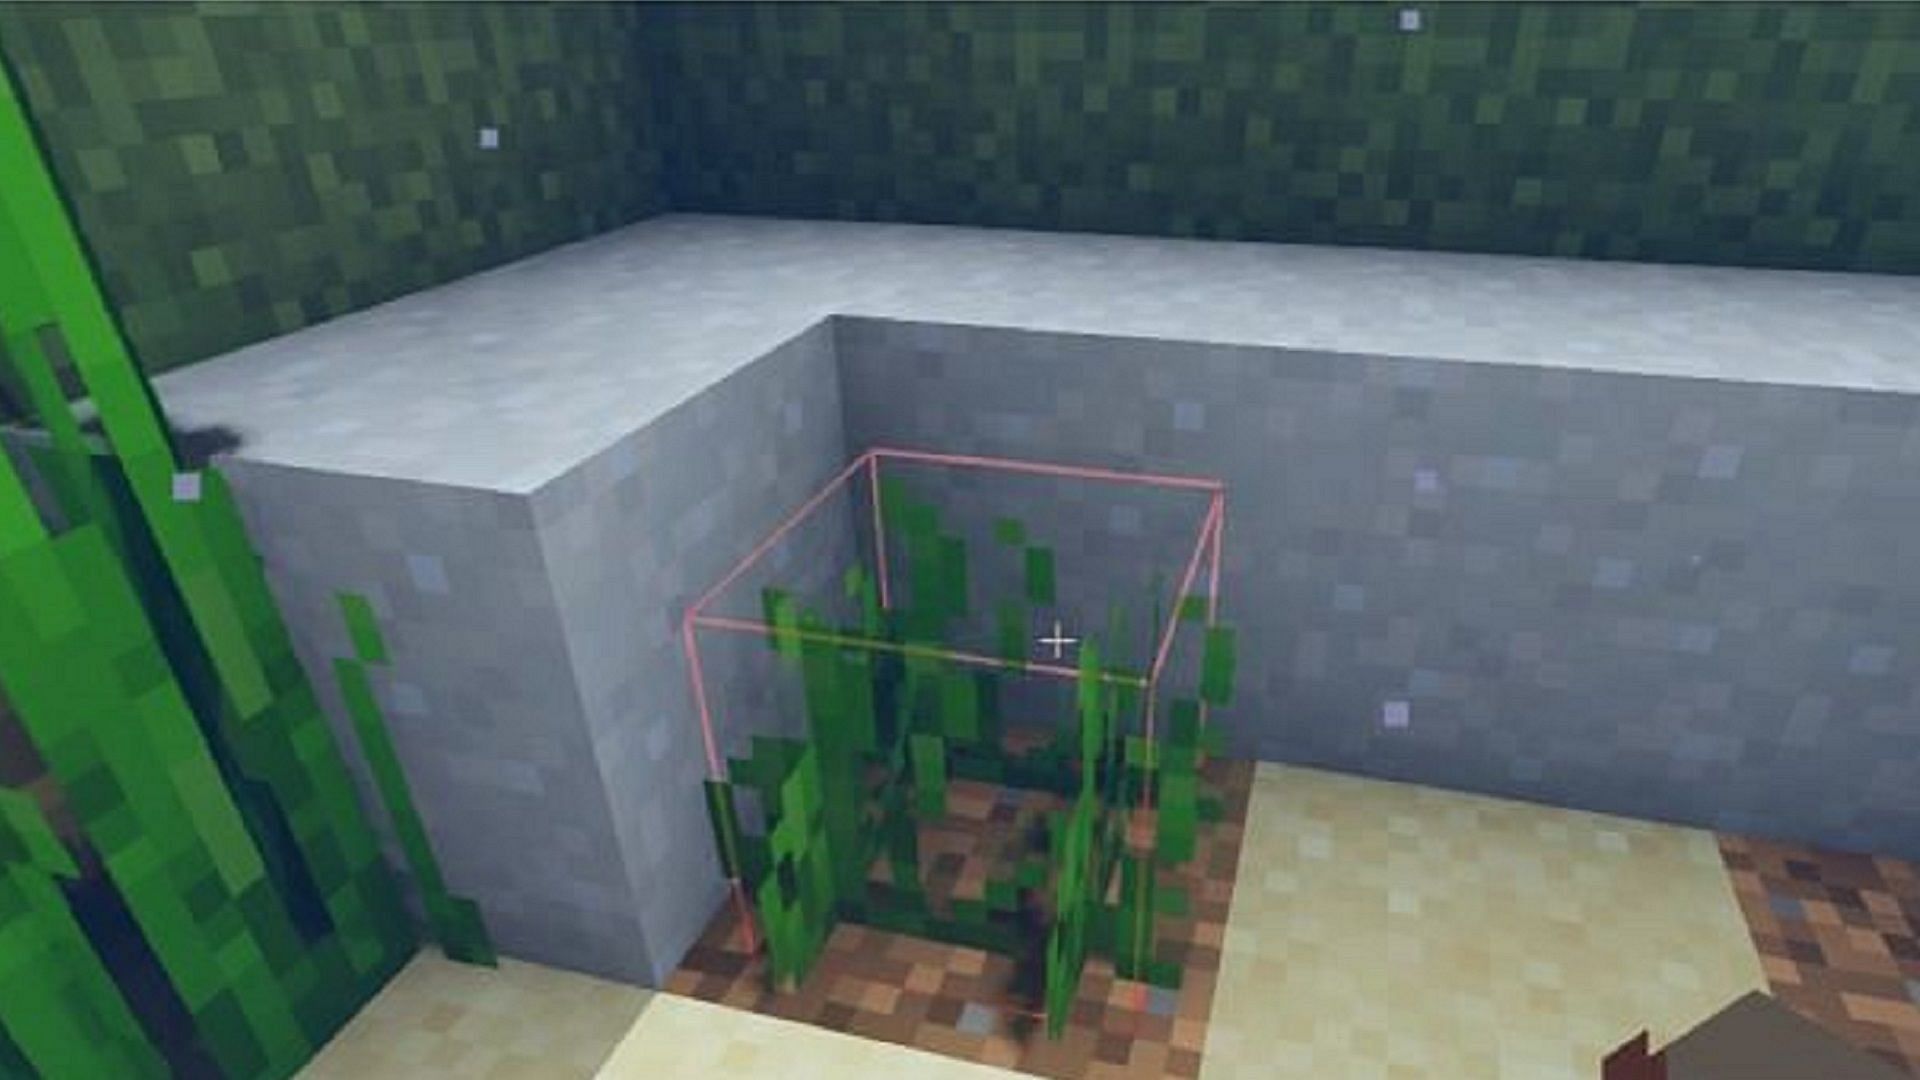 Underwater clay blocks in Minecraft (Image via Mojang)